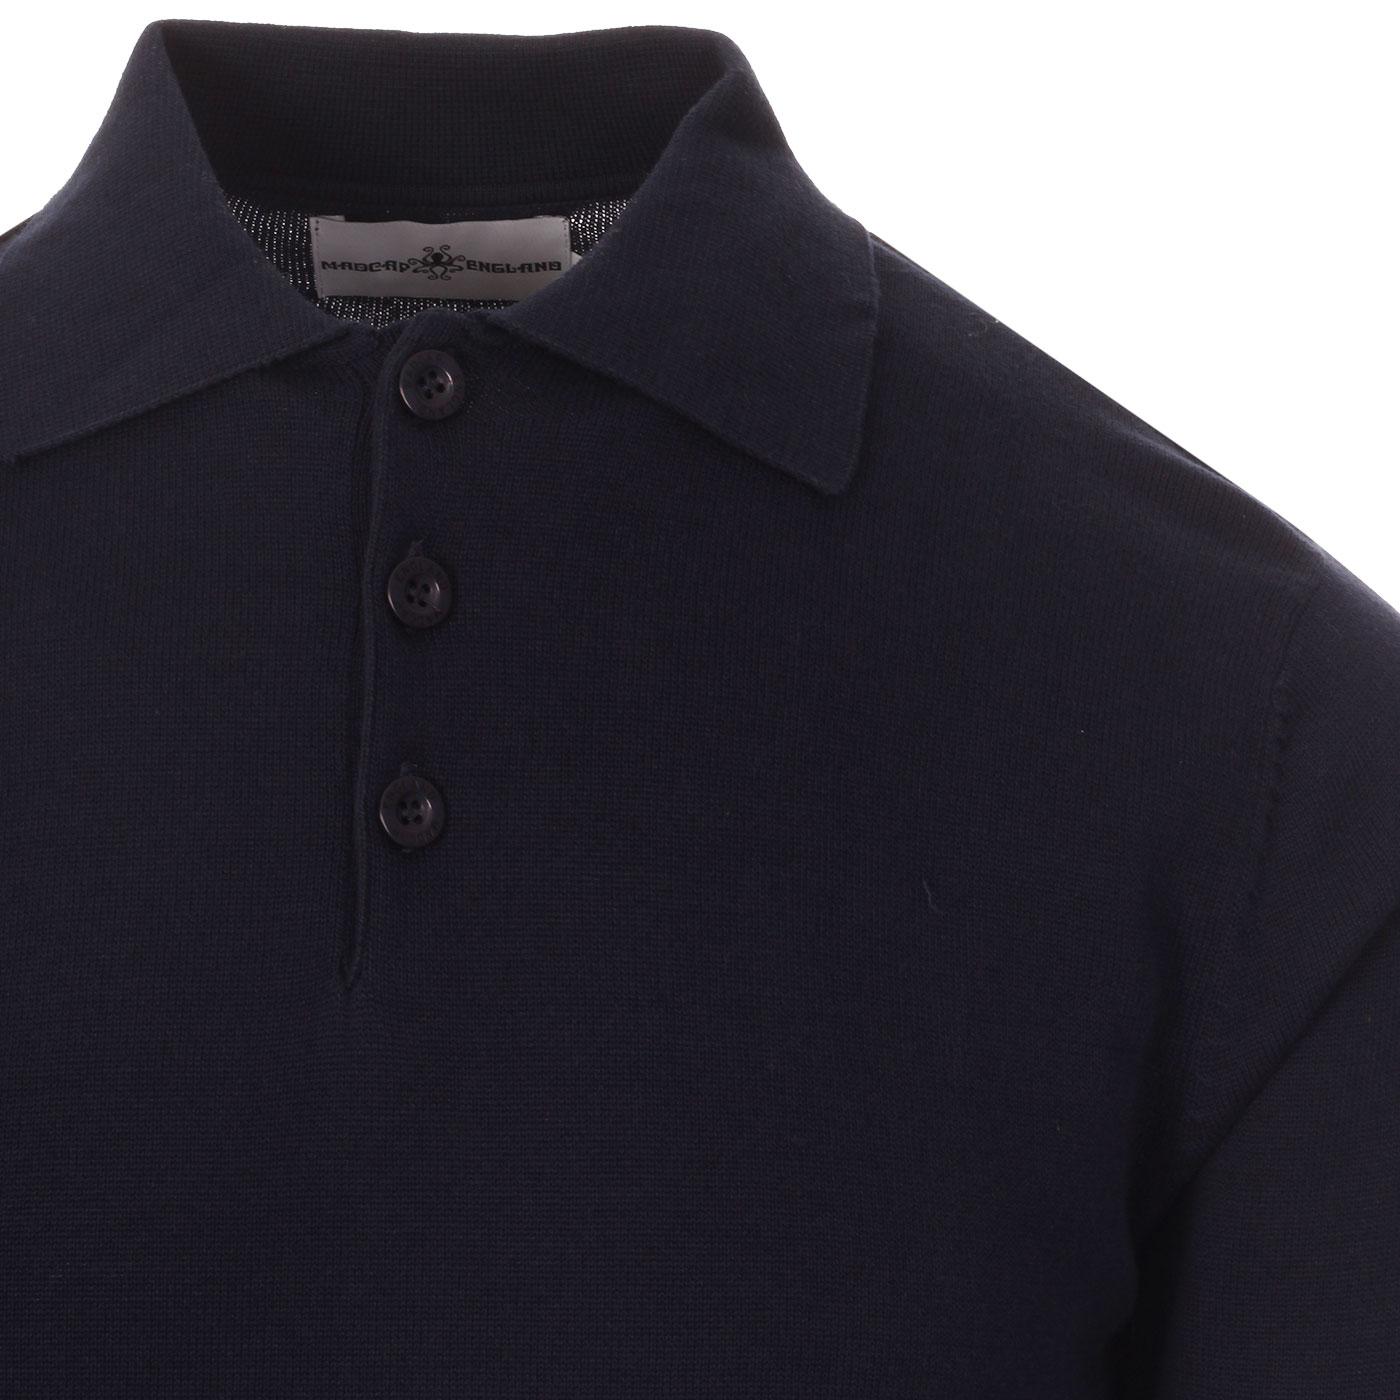 MADCAP ENGLAND Brando Retro 1960s Mod Knitted Polo Shirt in Navy